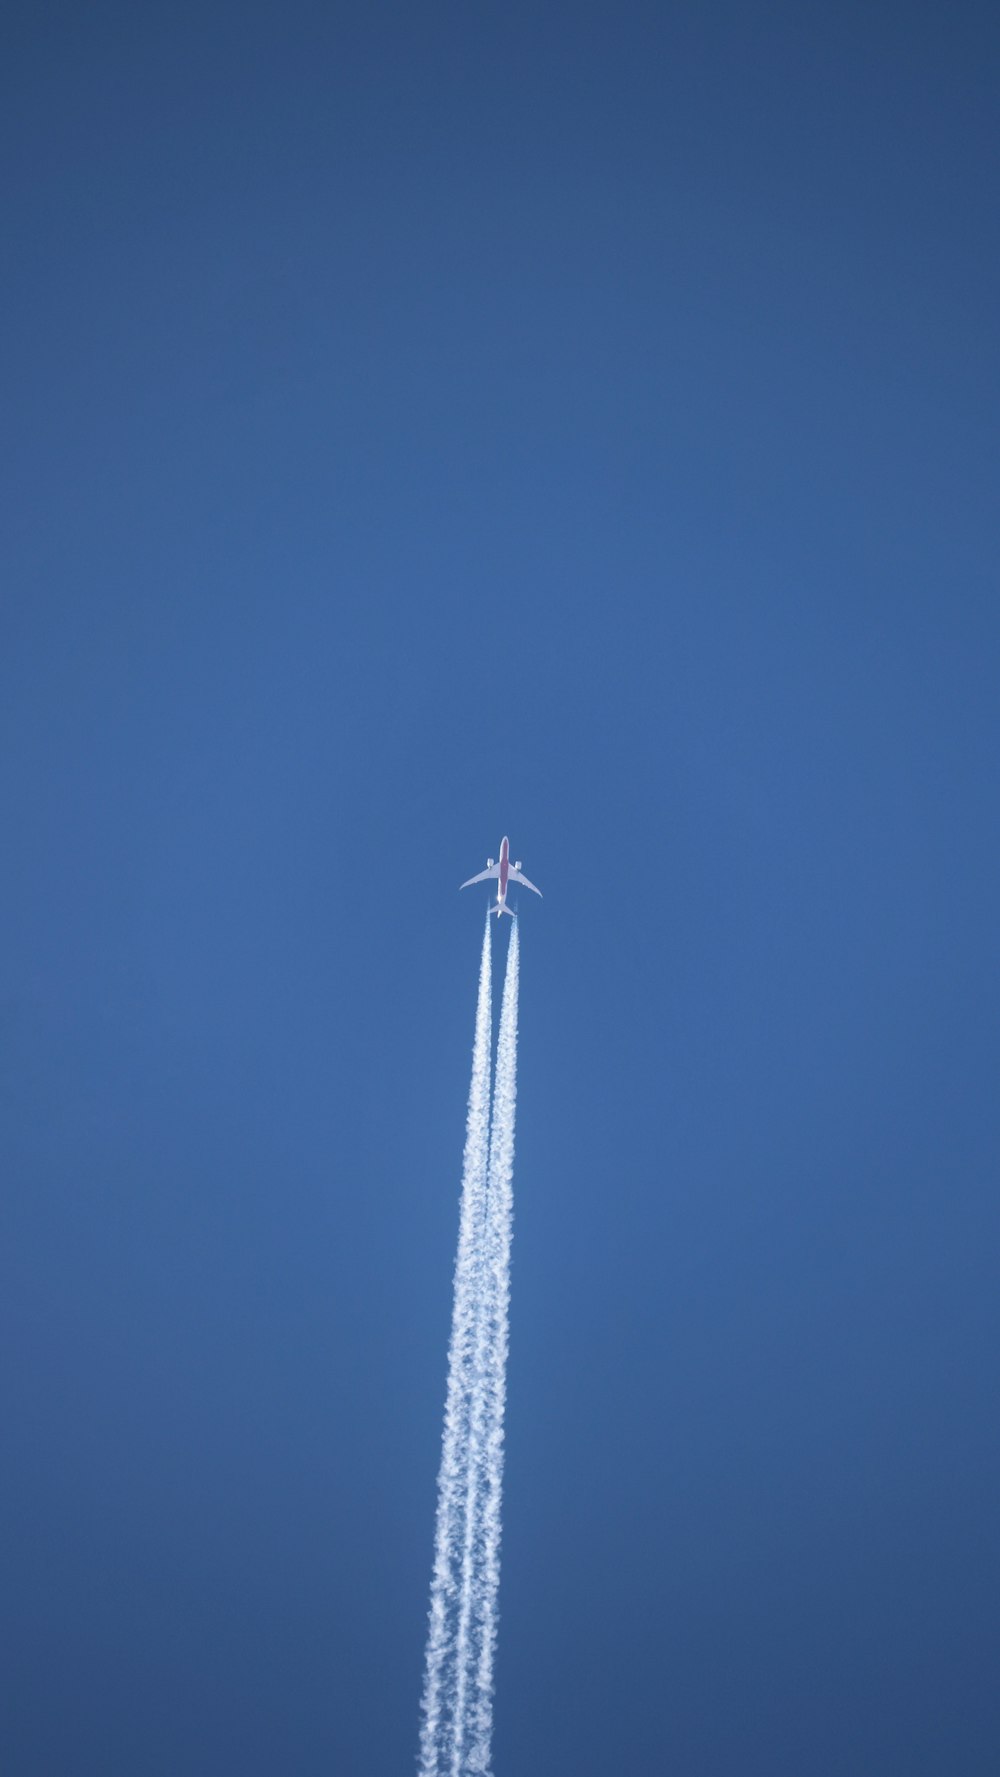 jet plane on flight